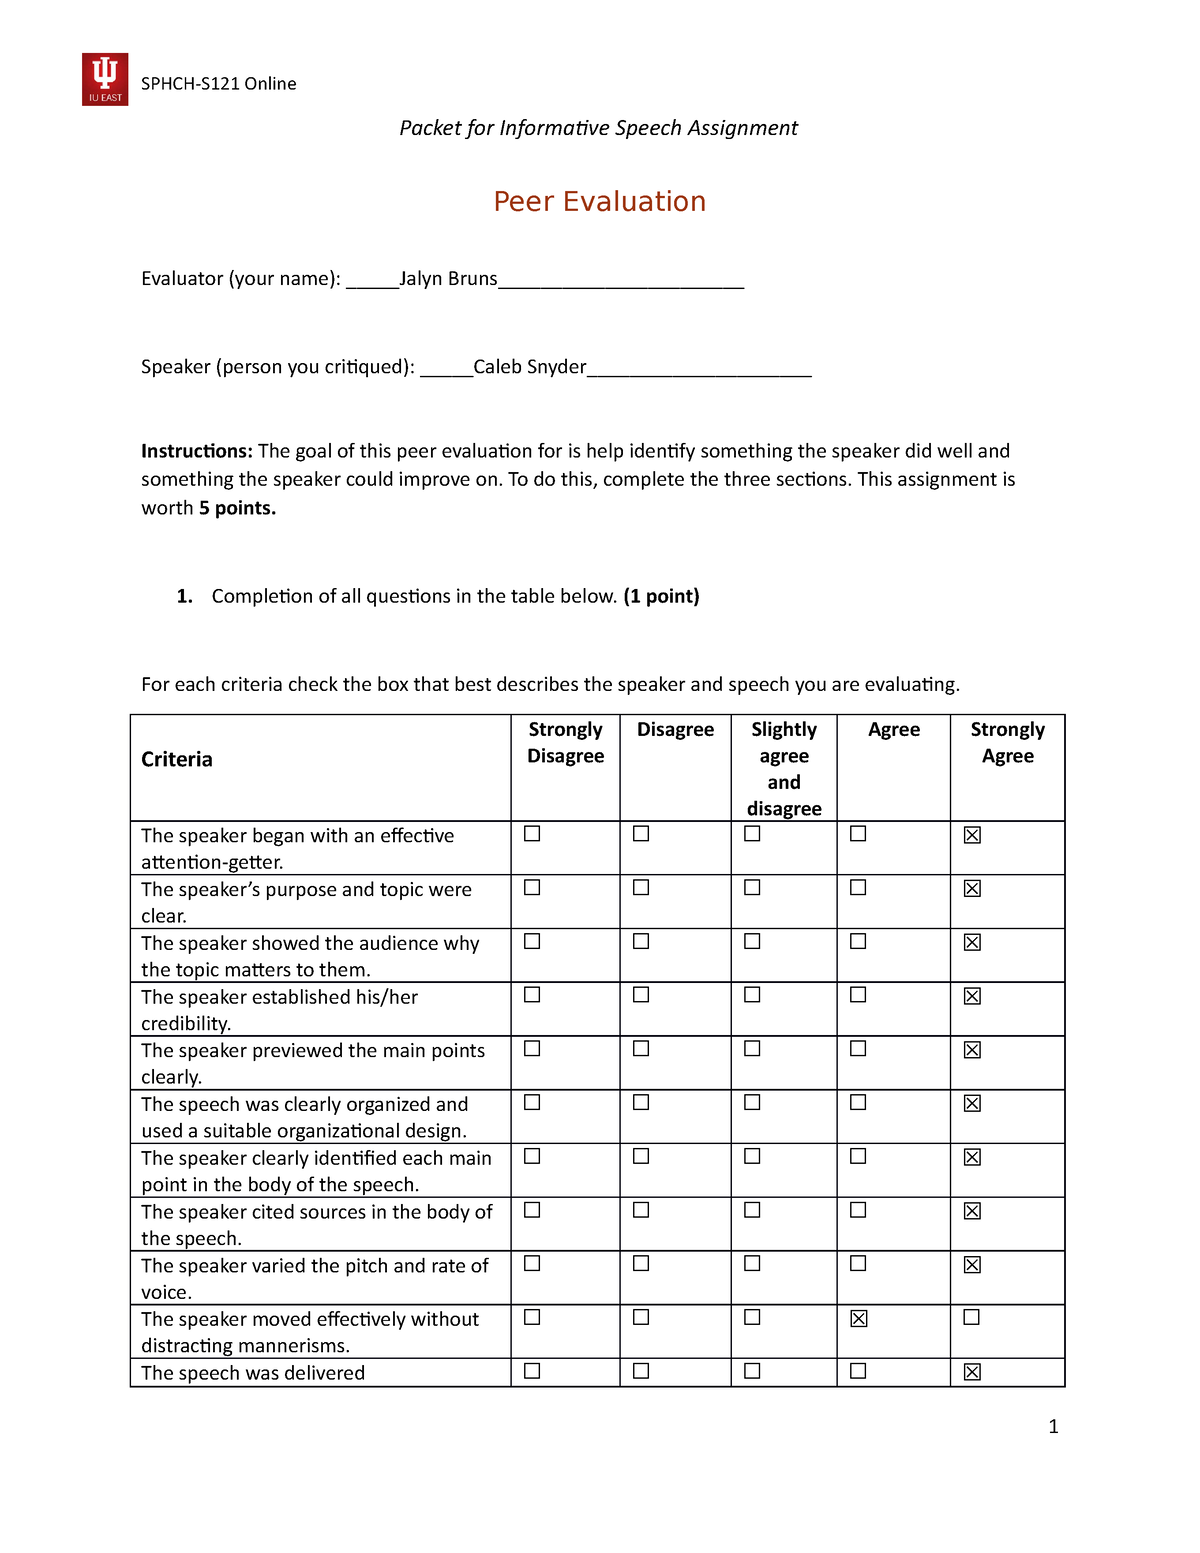 Informative speech peer evaluation 1 - SPHCH-S121 Online Packet for ...